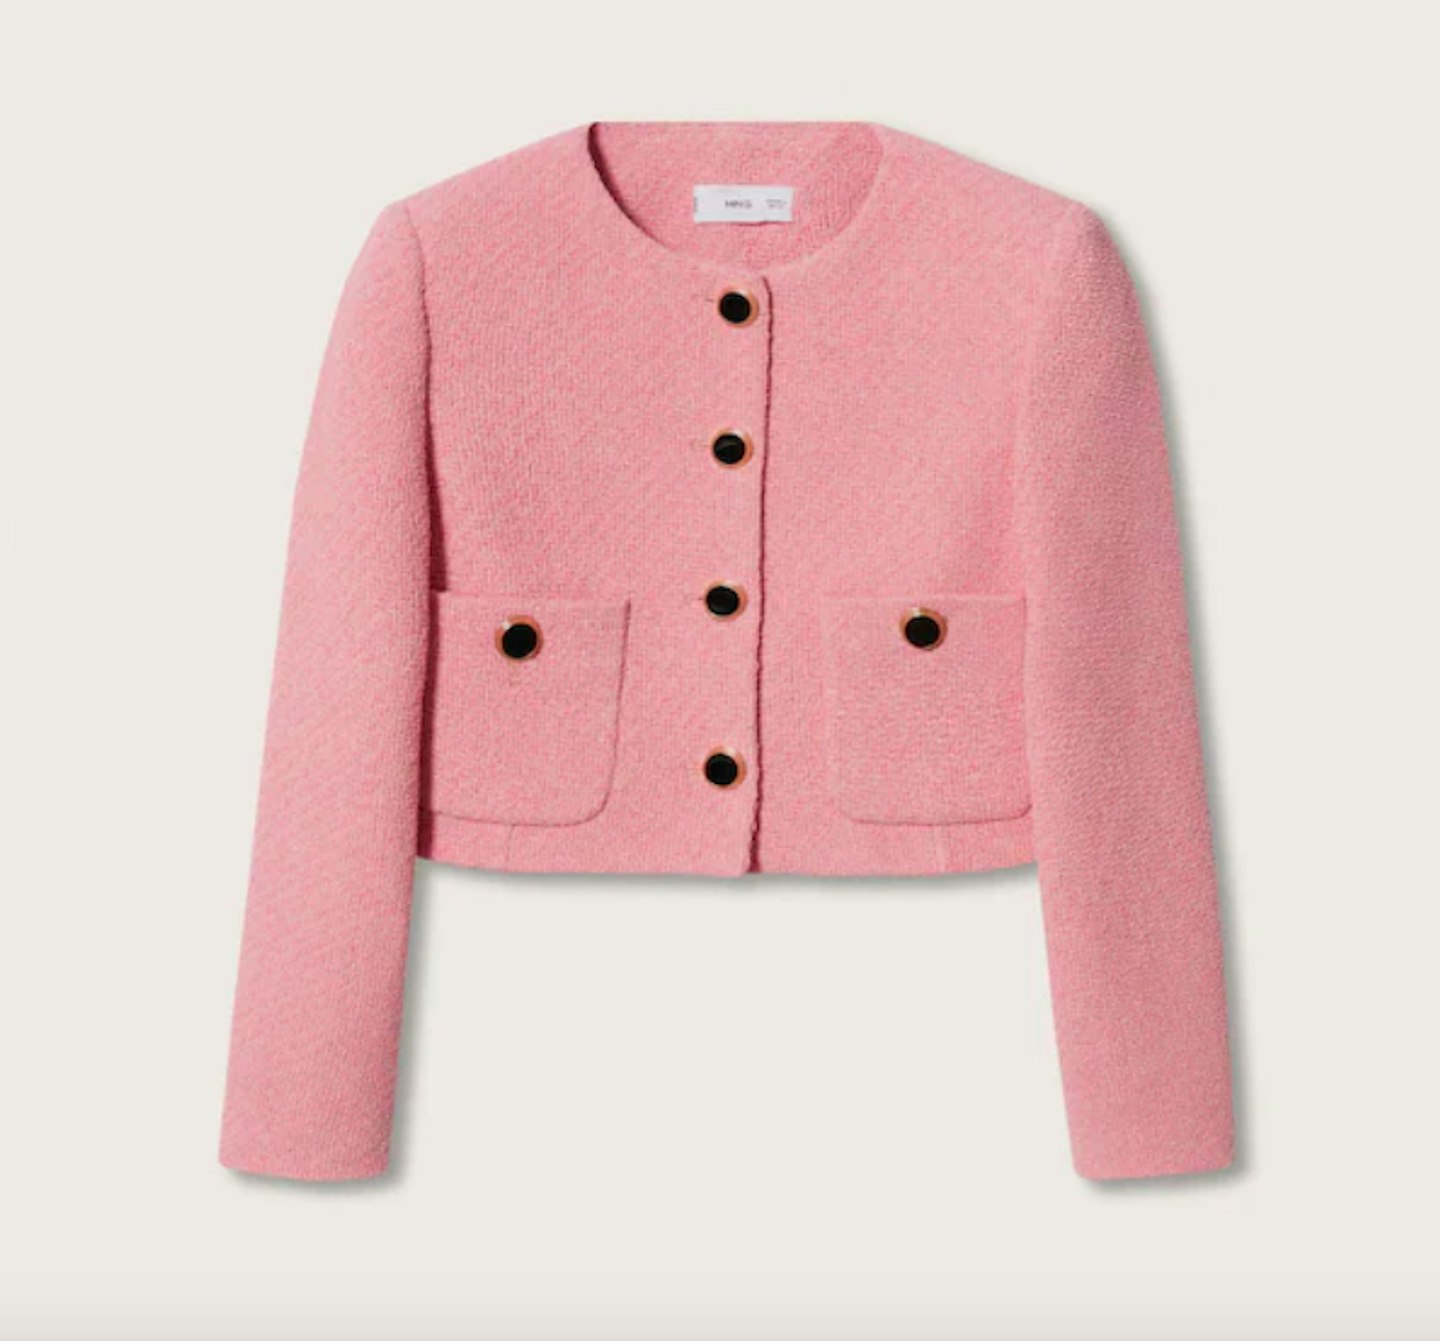 Crop Tweed Jacket, £69.99